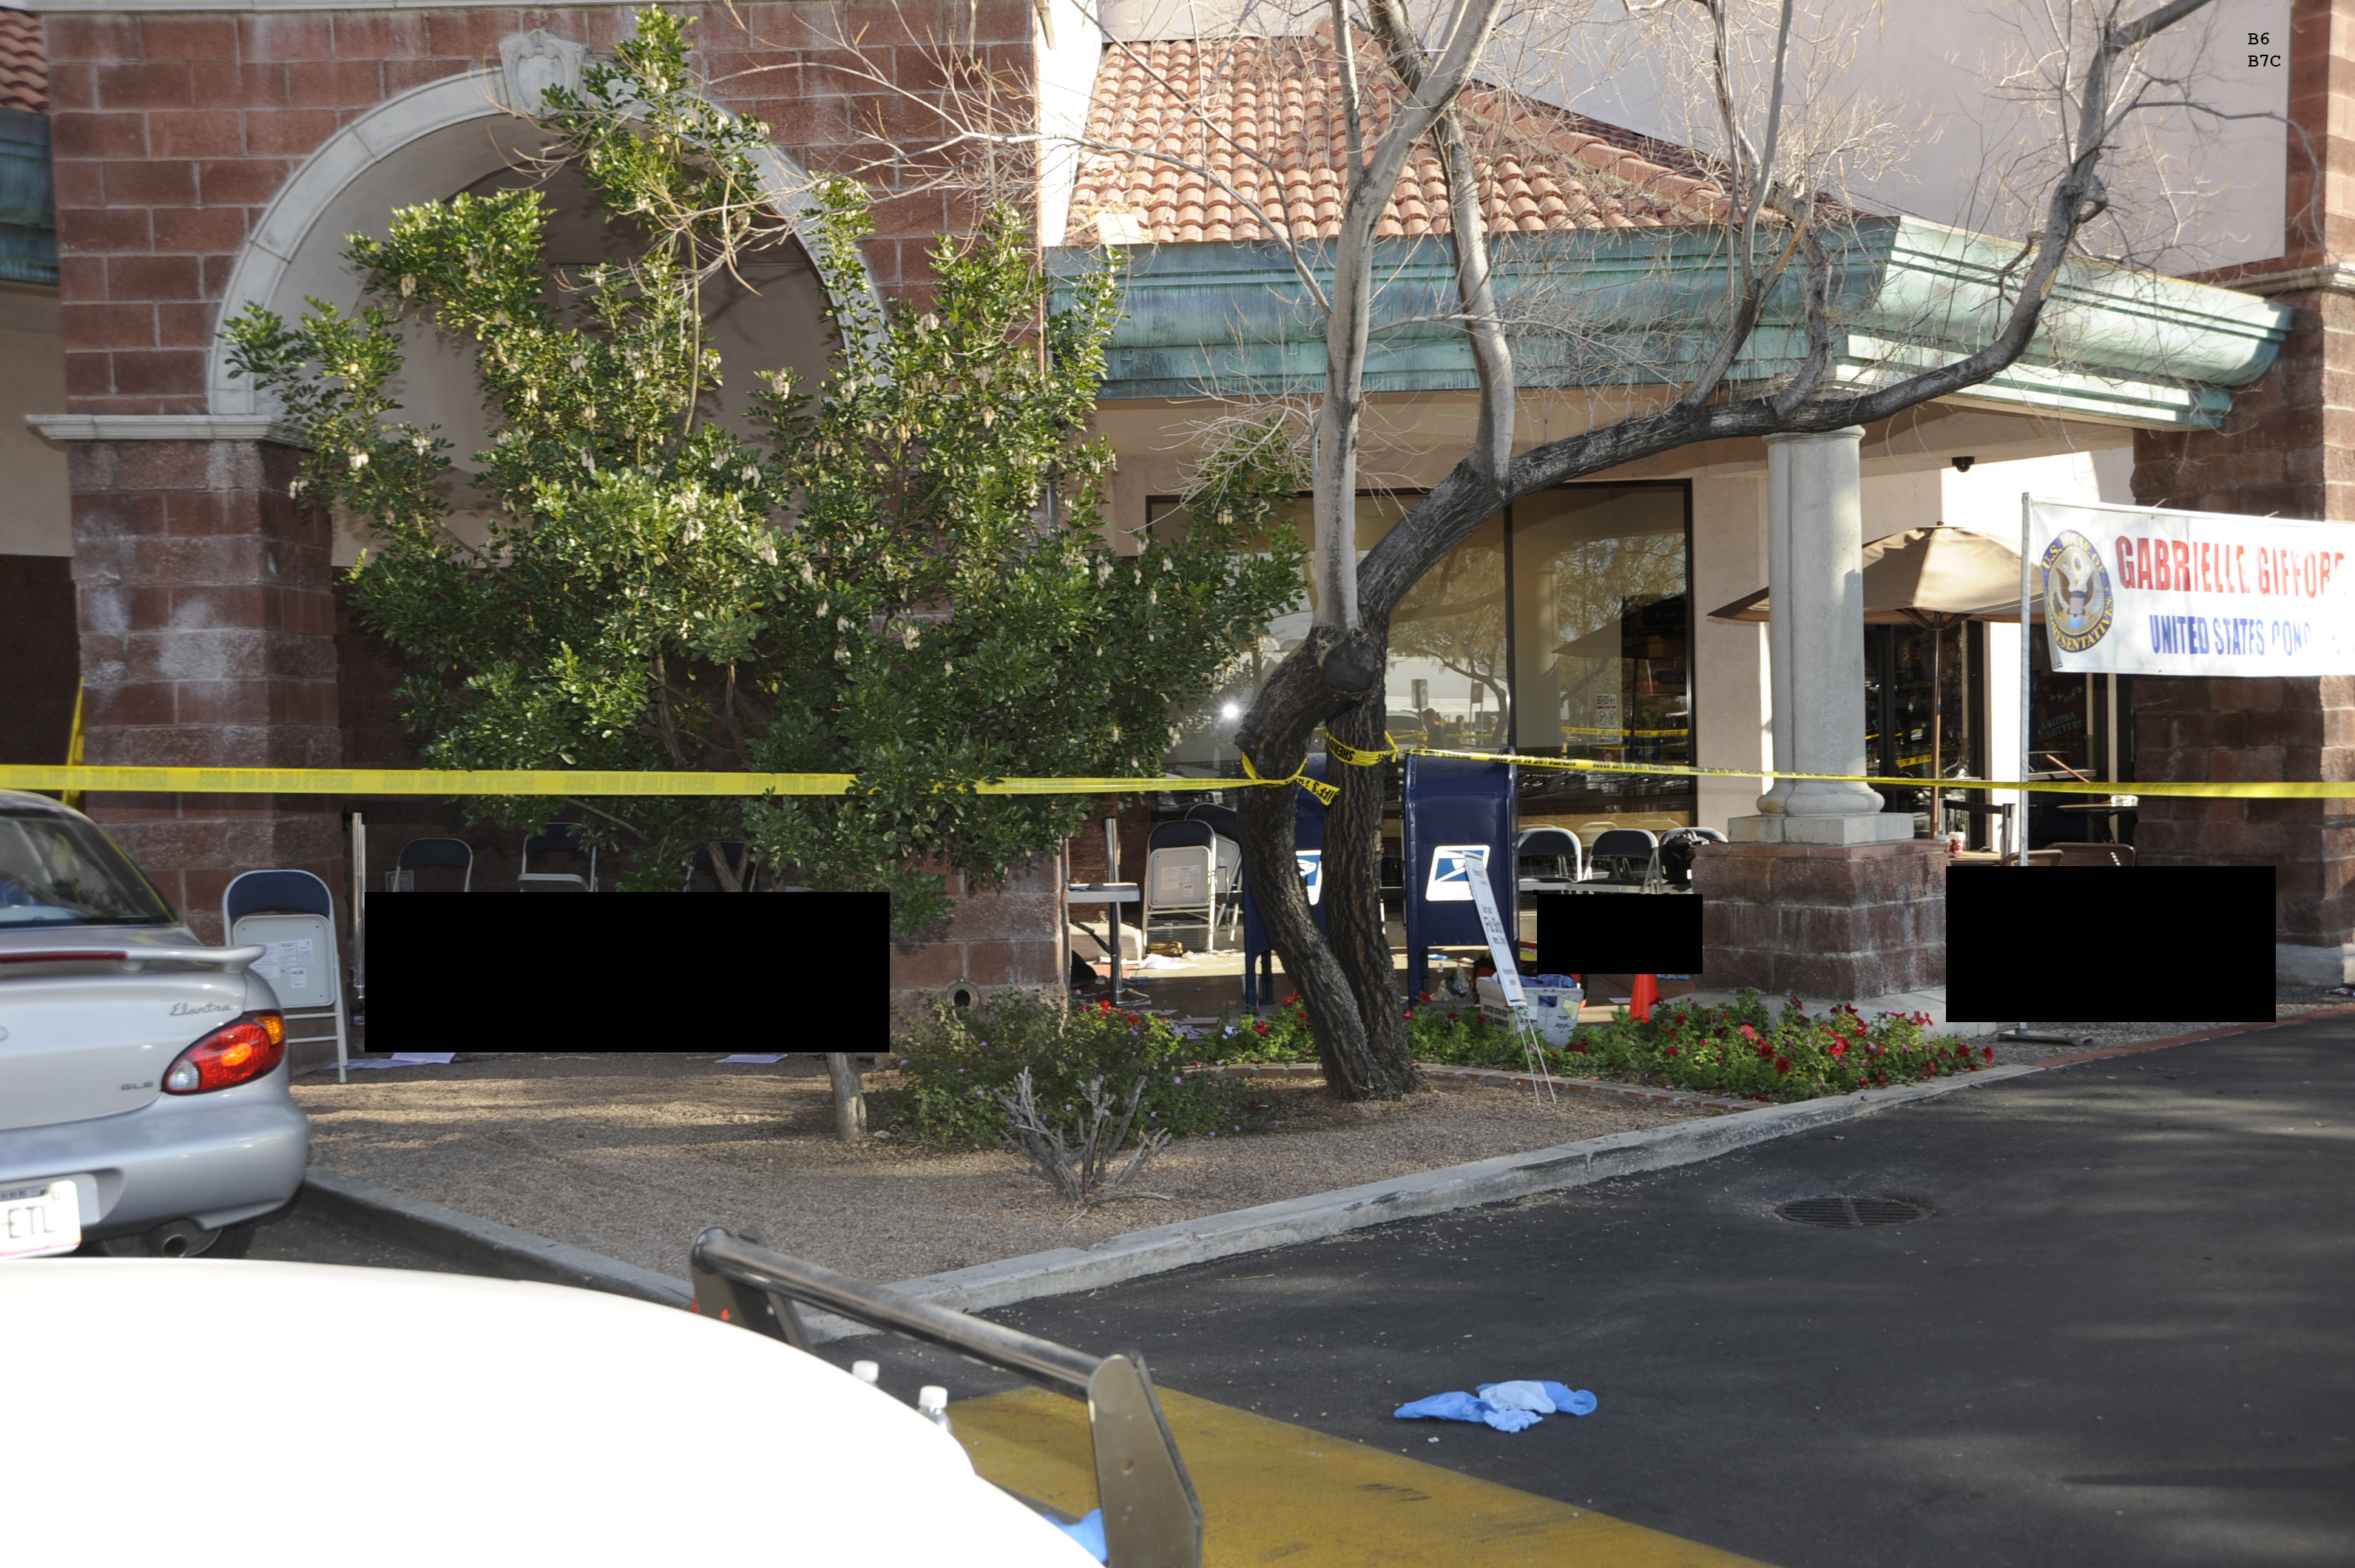  2011 Tucson Shooting Crime Scene - Photograph 59